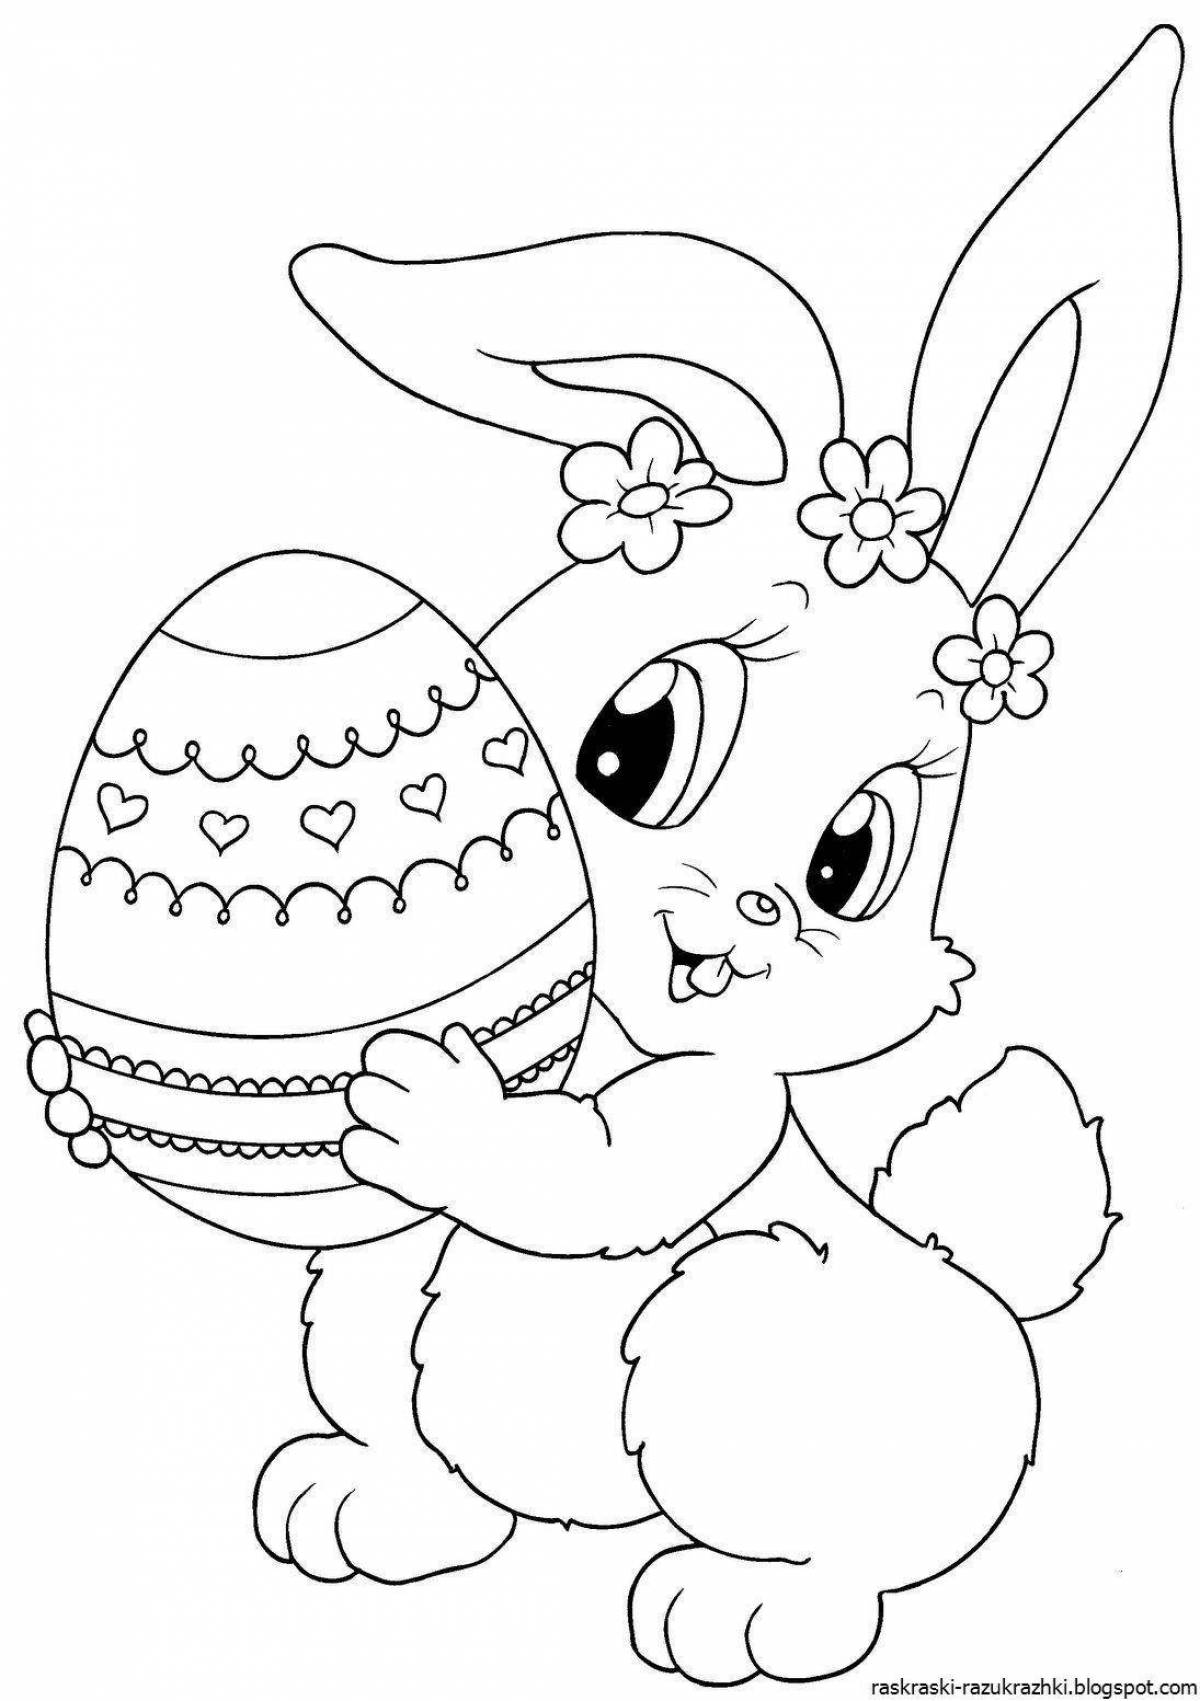 Charming rabbit coloring book